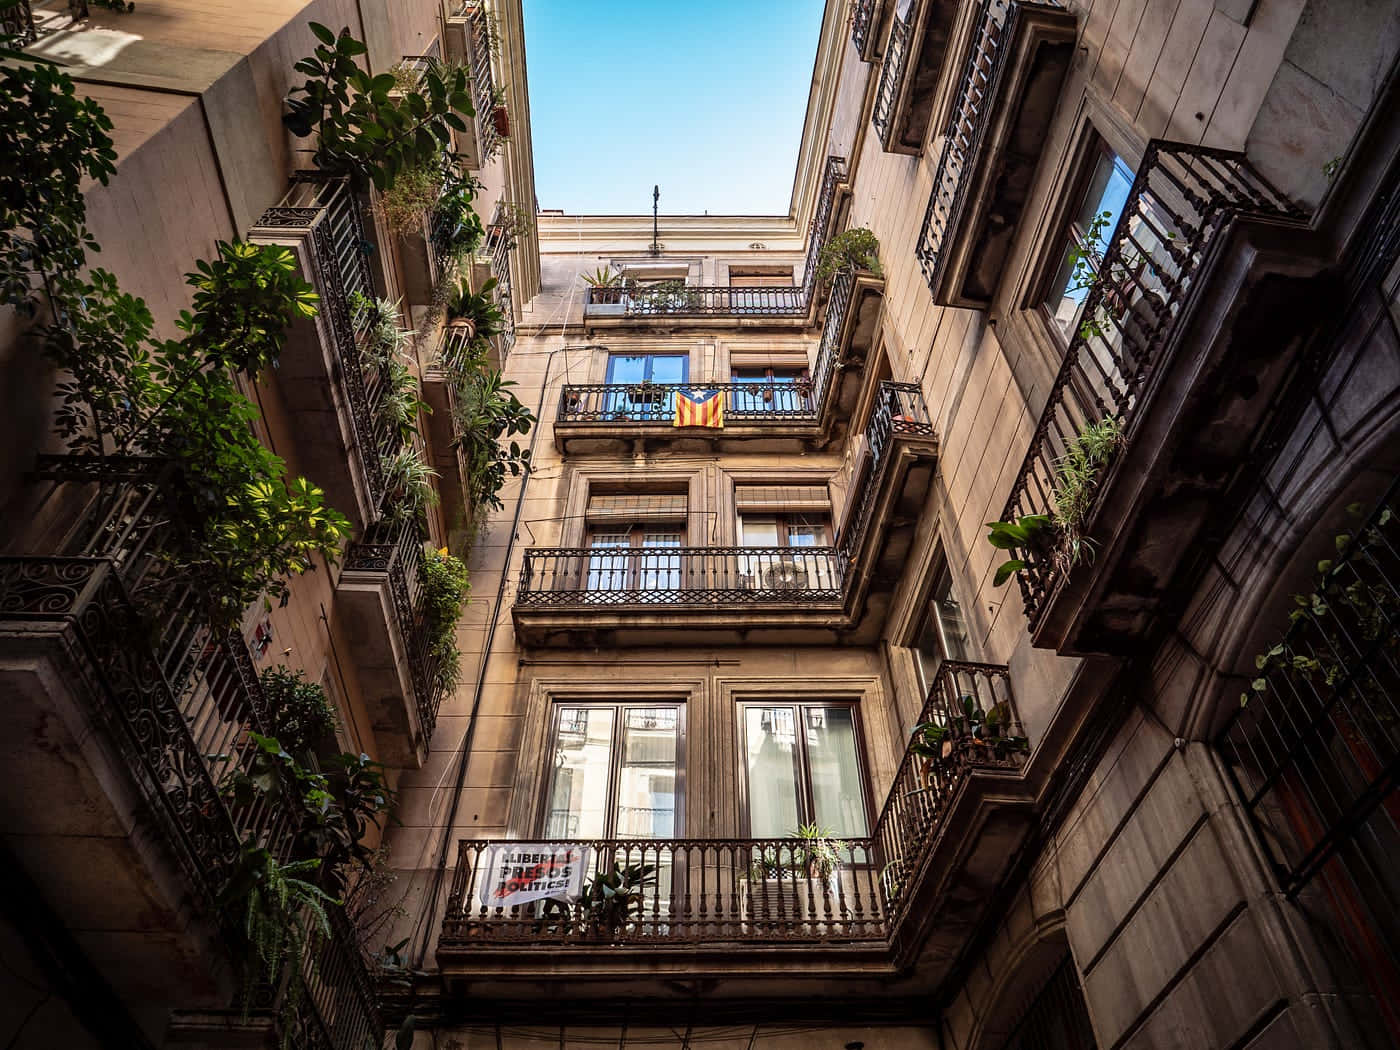 Barcelona’s iconic and vibrant architecture